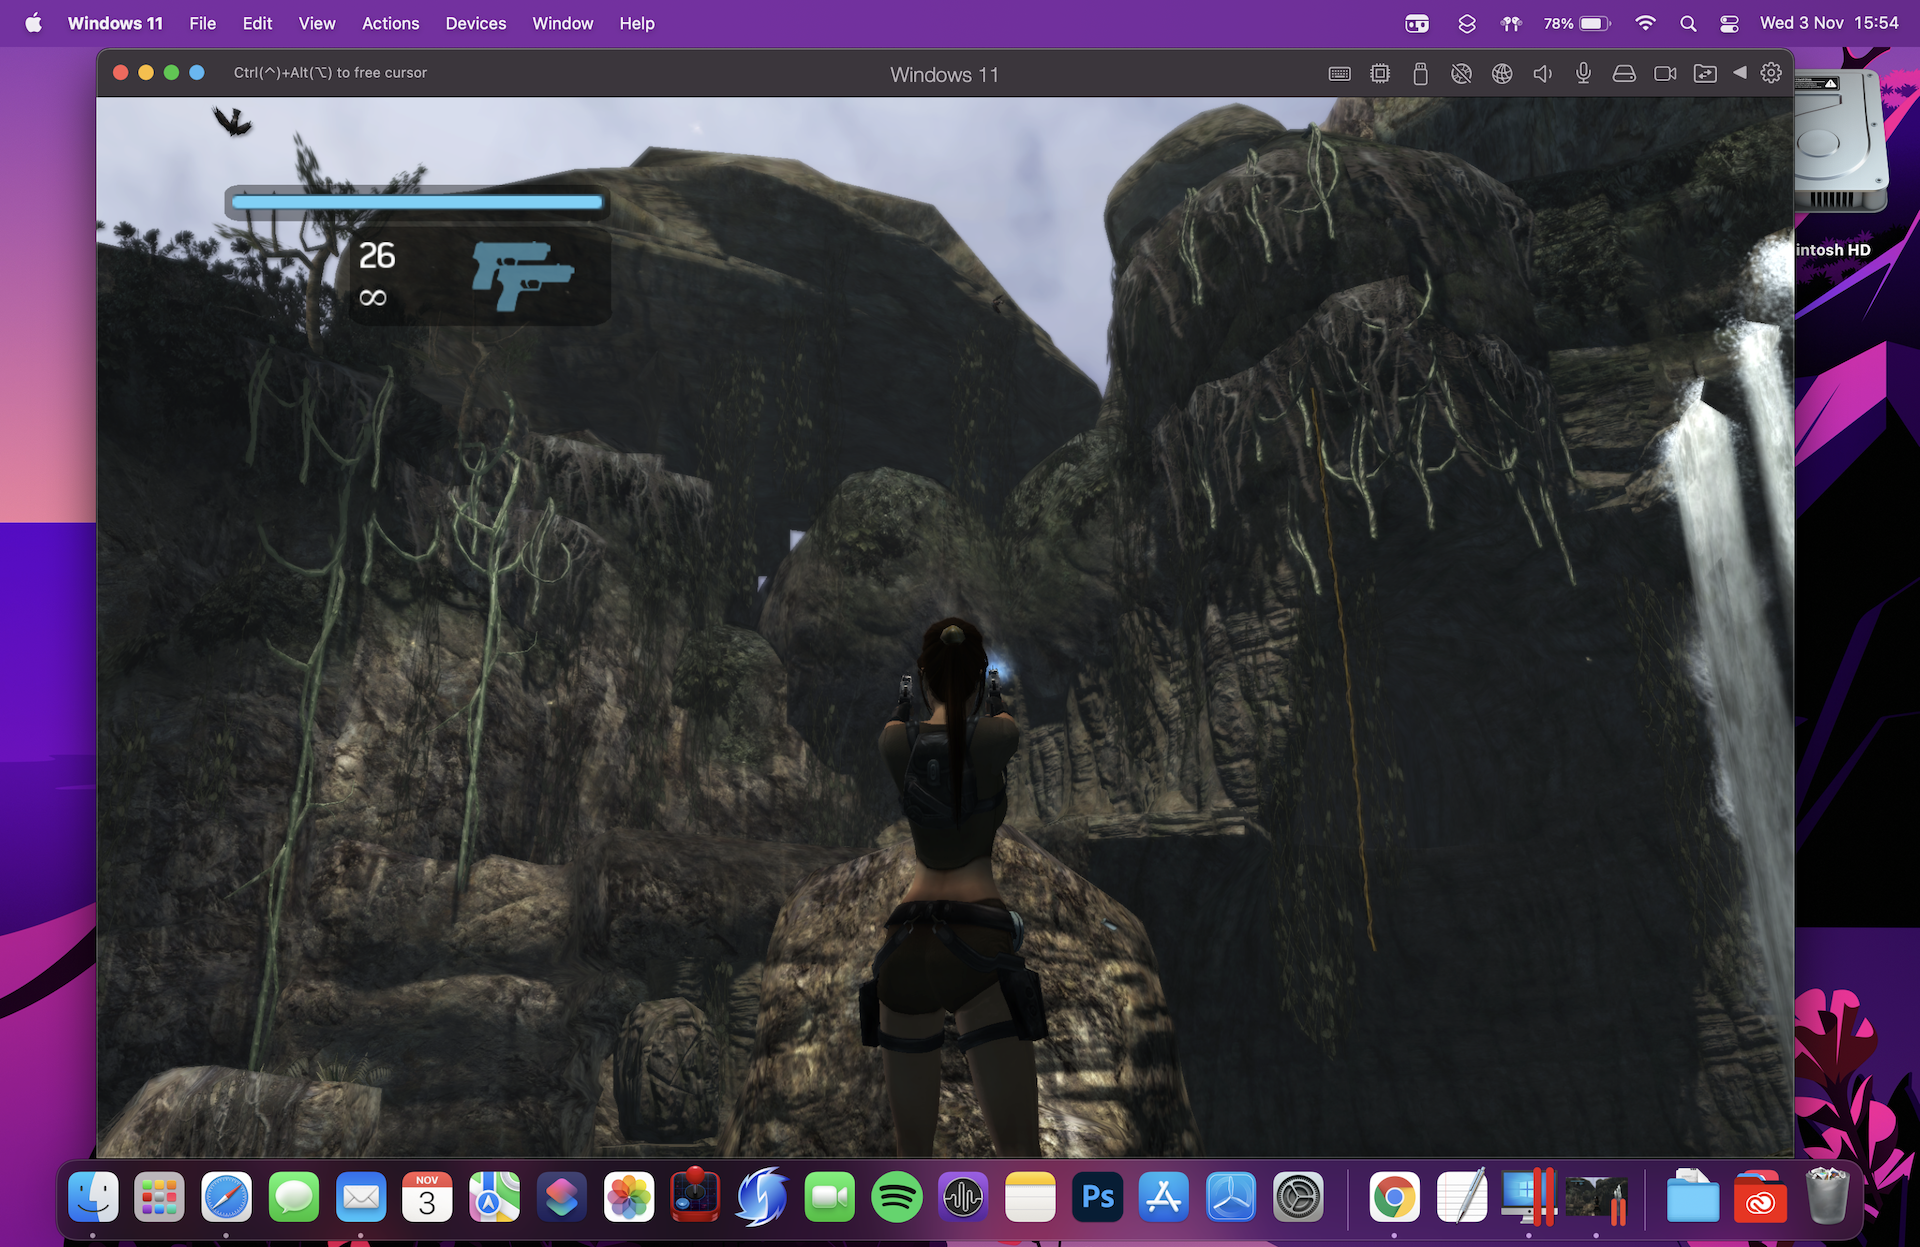 Tomb Raider Legend on Parallels Desktop 17 on an M1 MacBook Pro